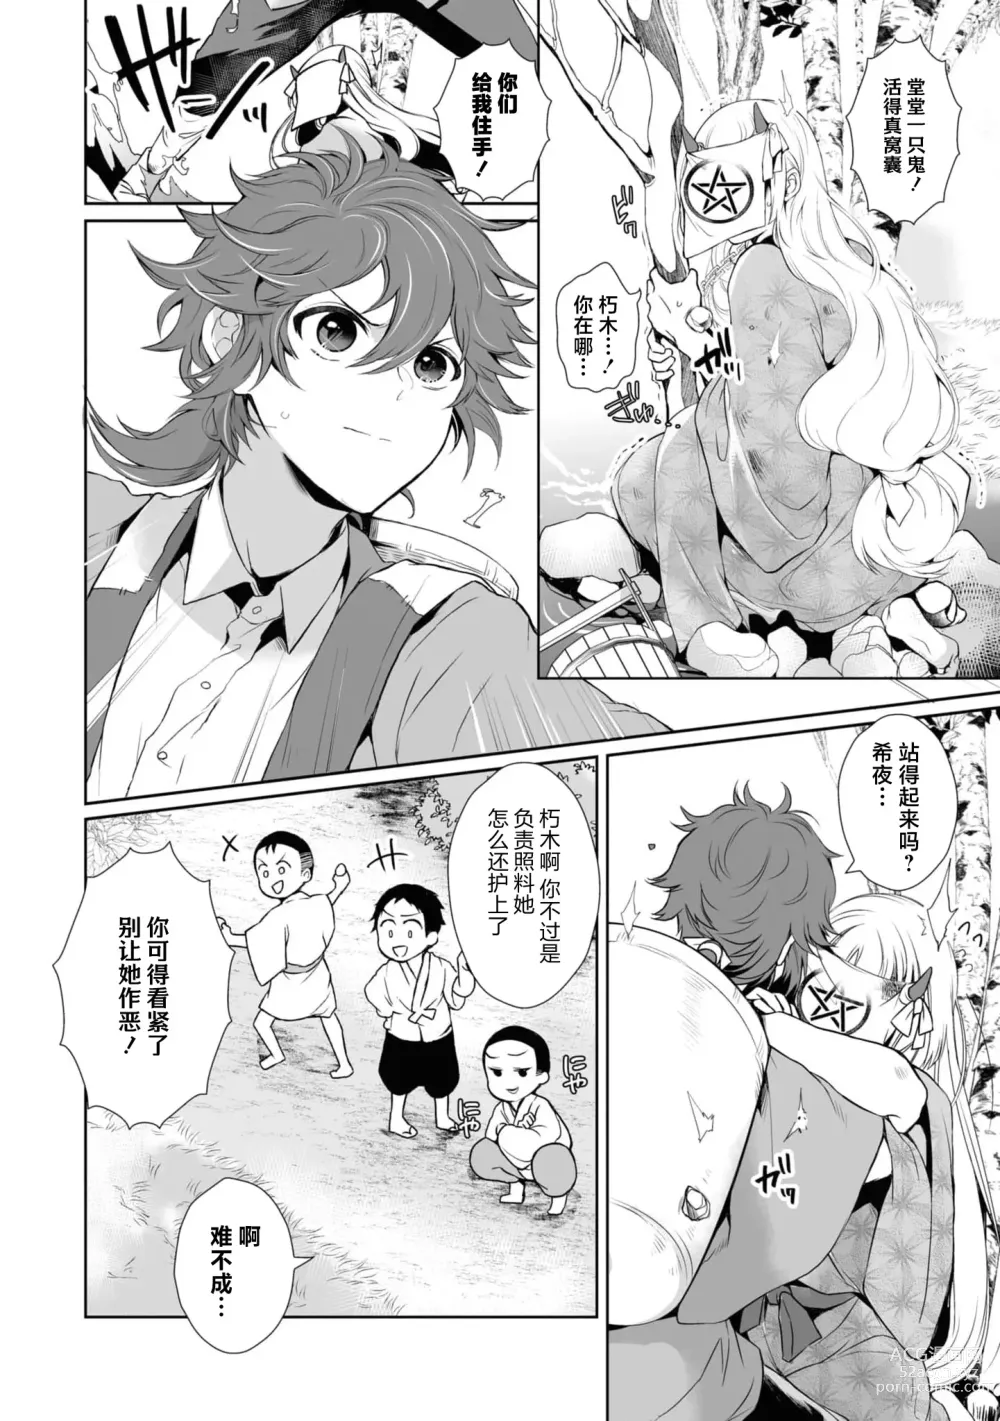 Page 4 of manga 大正异种婚物语